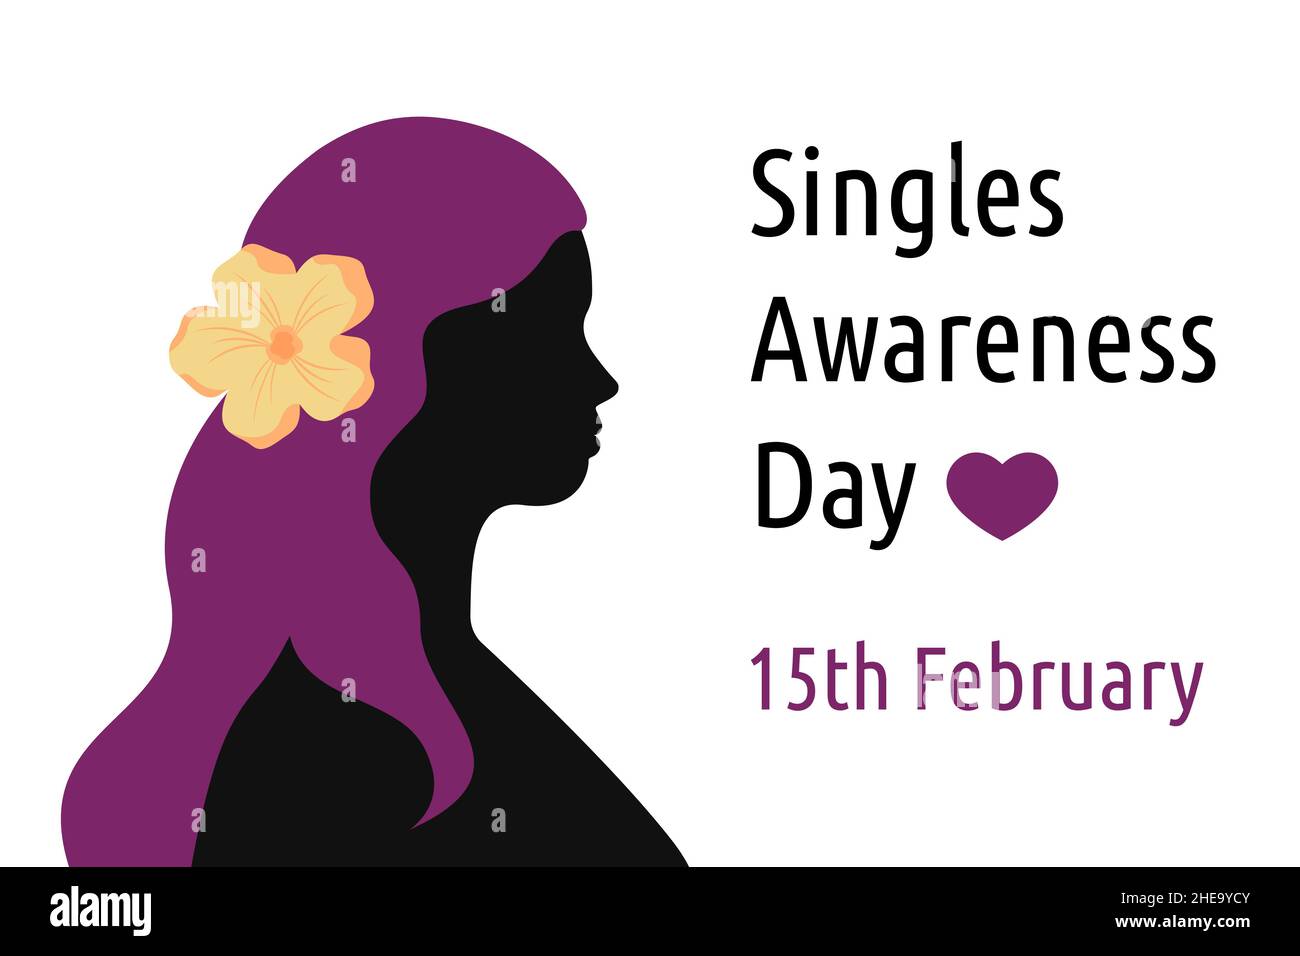 single awareness day